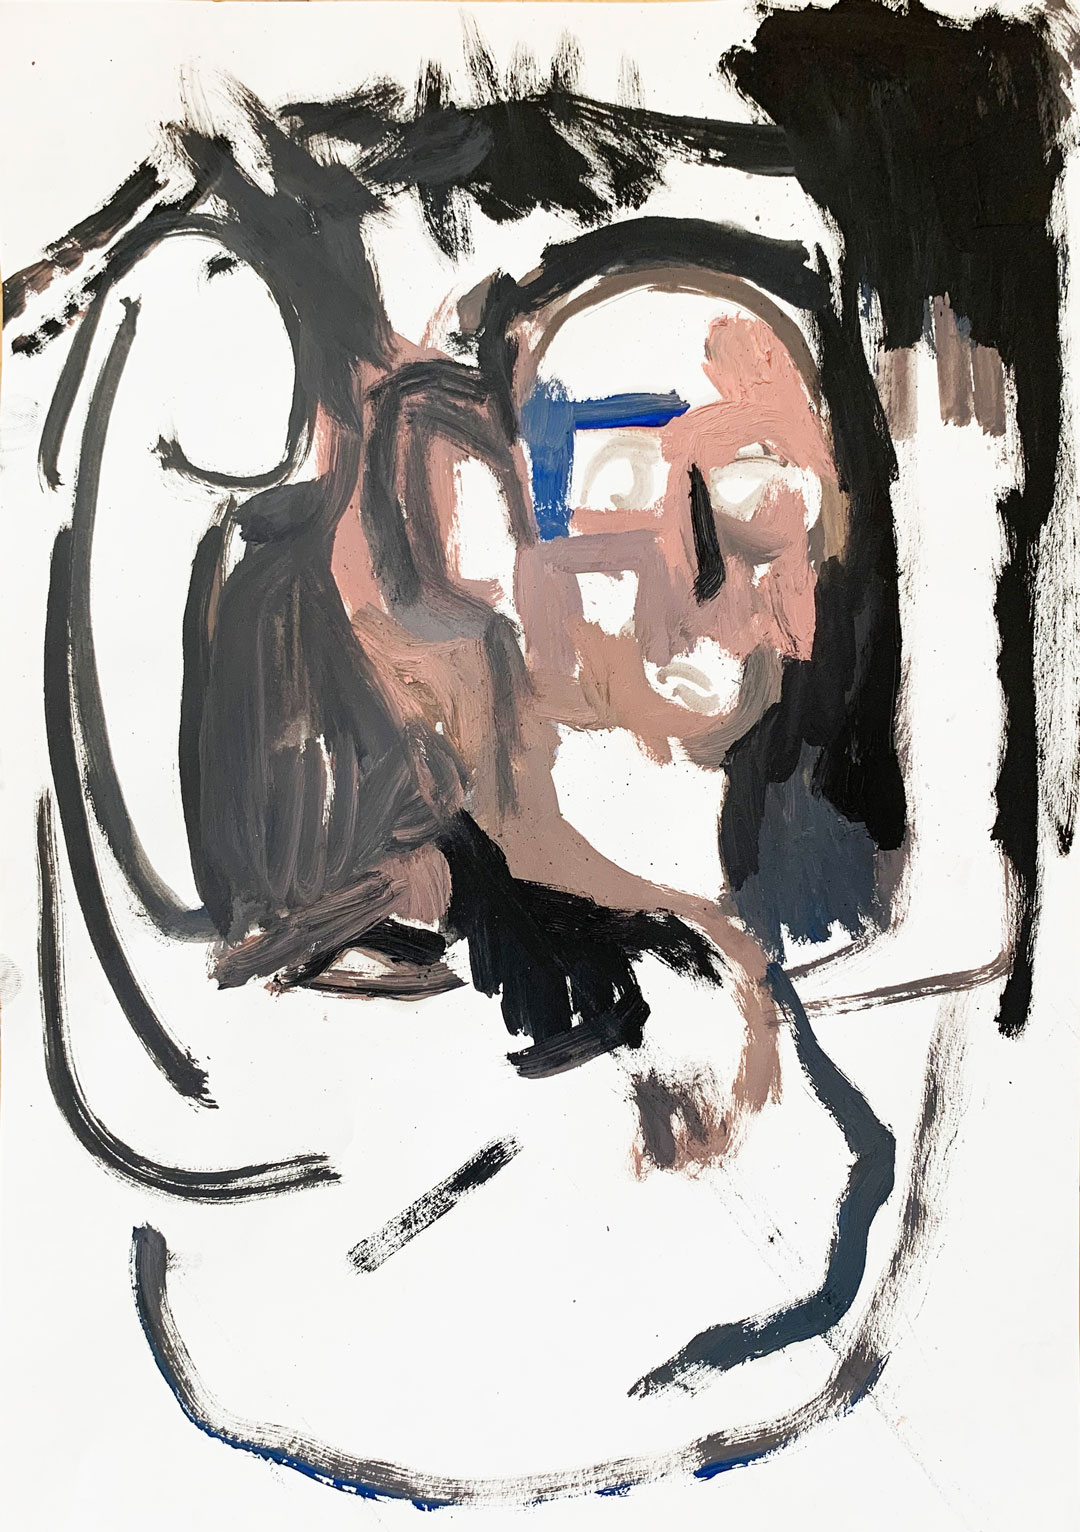 Ölmalerei auf Papier, 29,5 x 41,5 cm, 2020